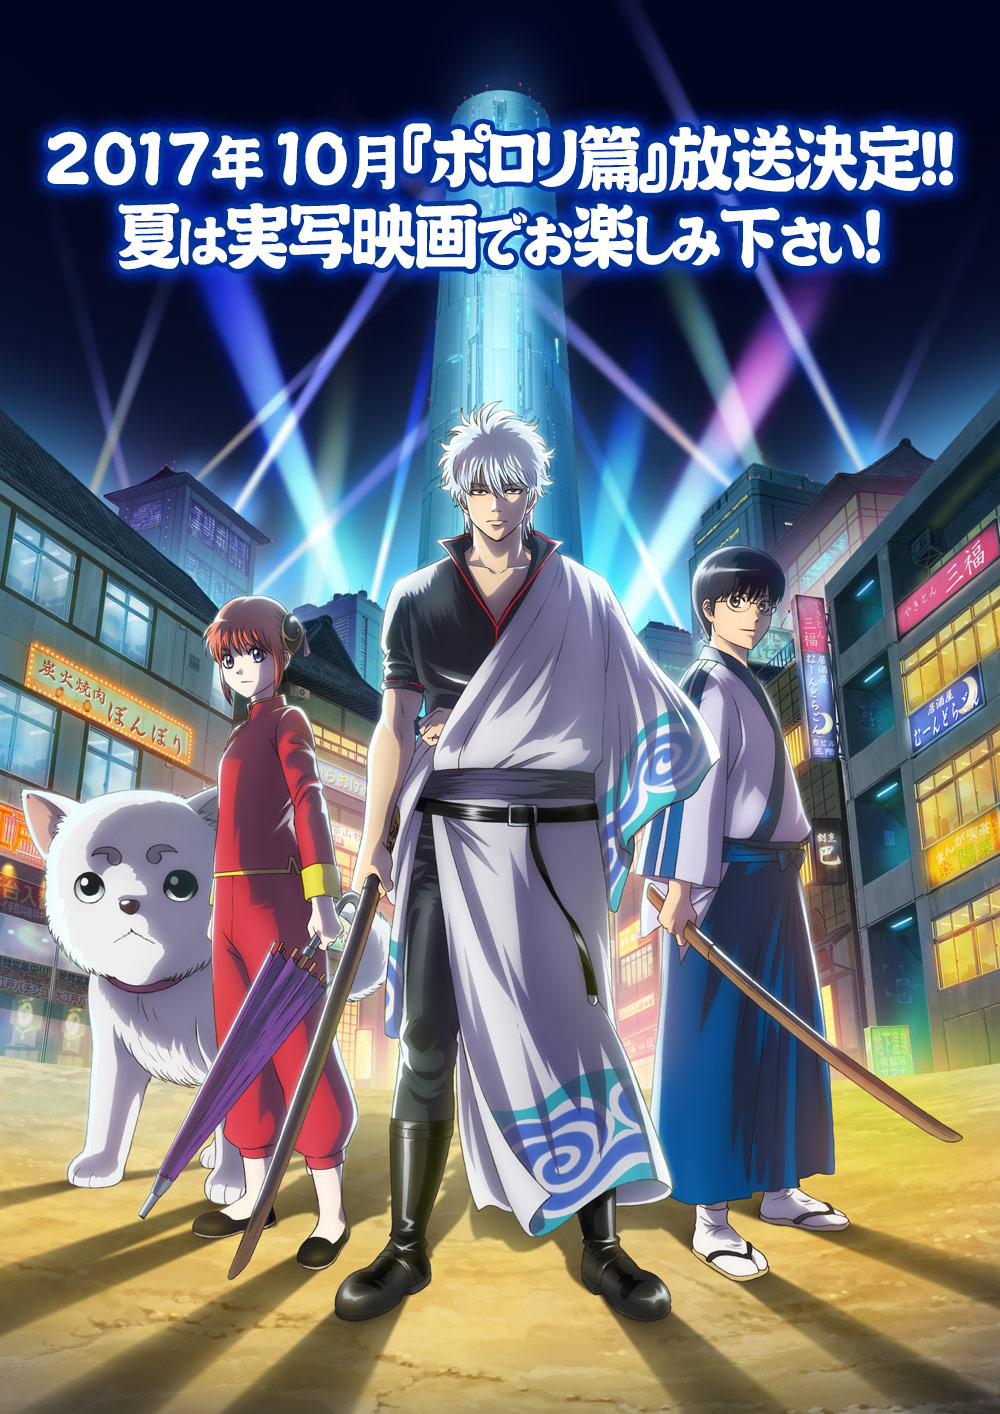 Gintama-Season-6-Announcement-Image